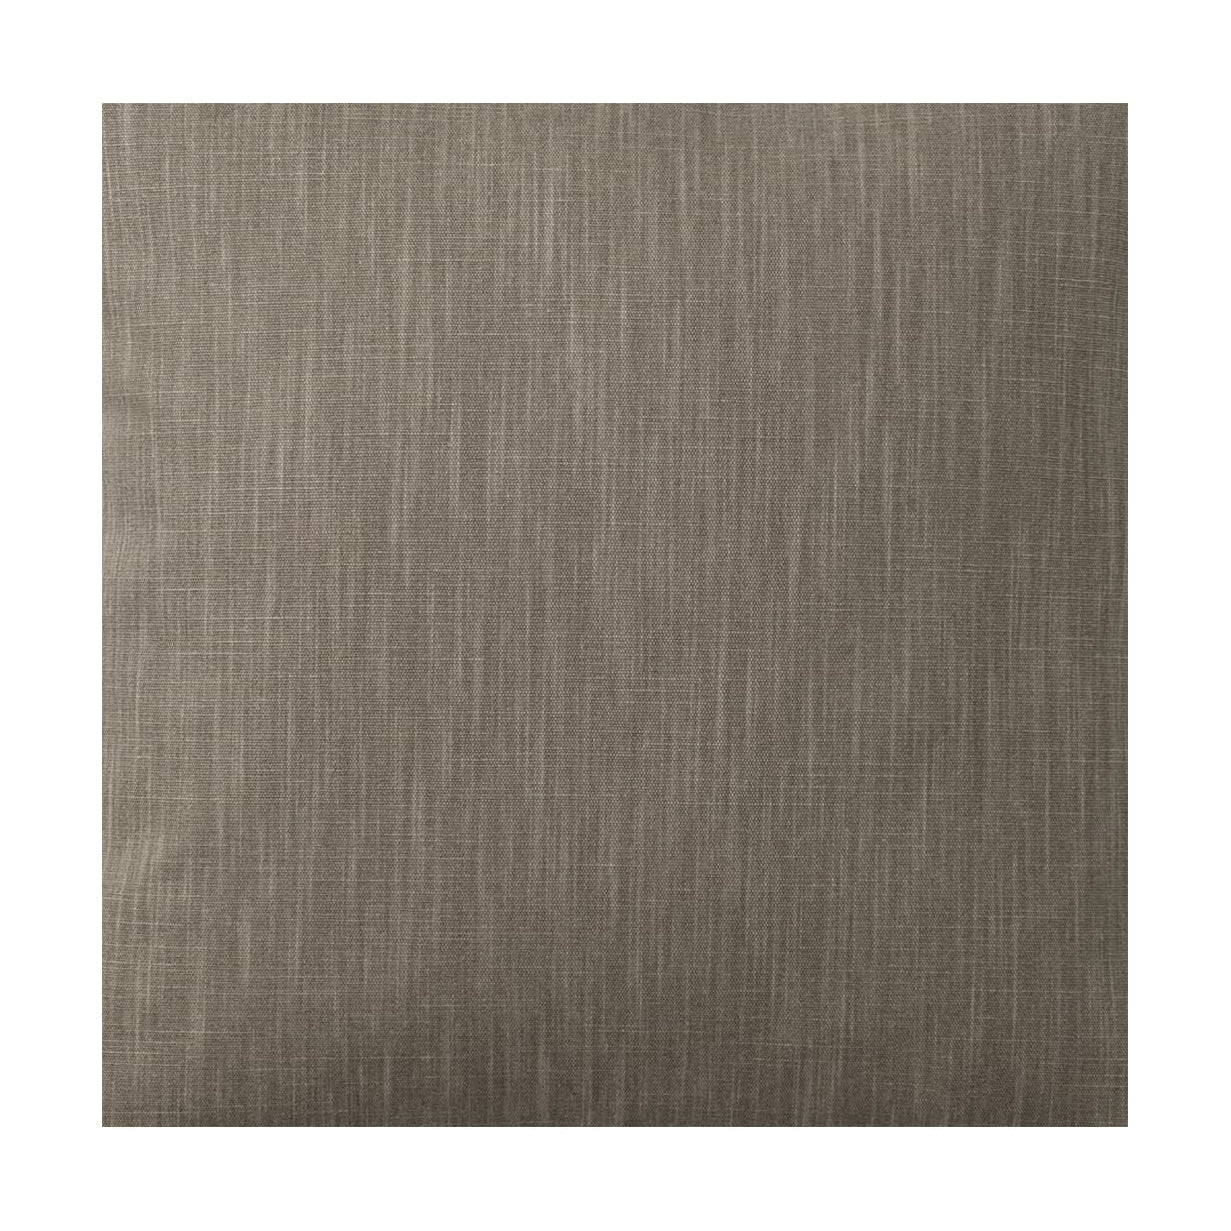 Spira Klotz Fabric Width 150 Cm (Price Per Meter), Brown